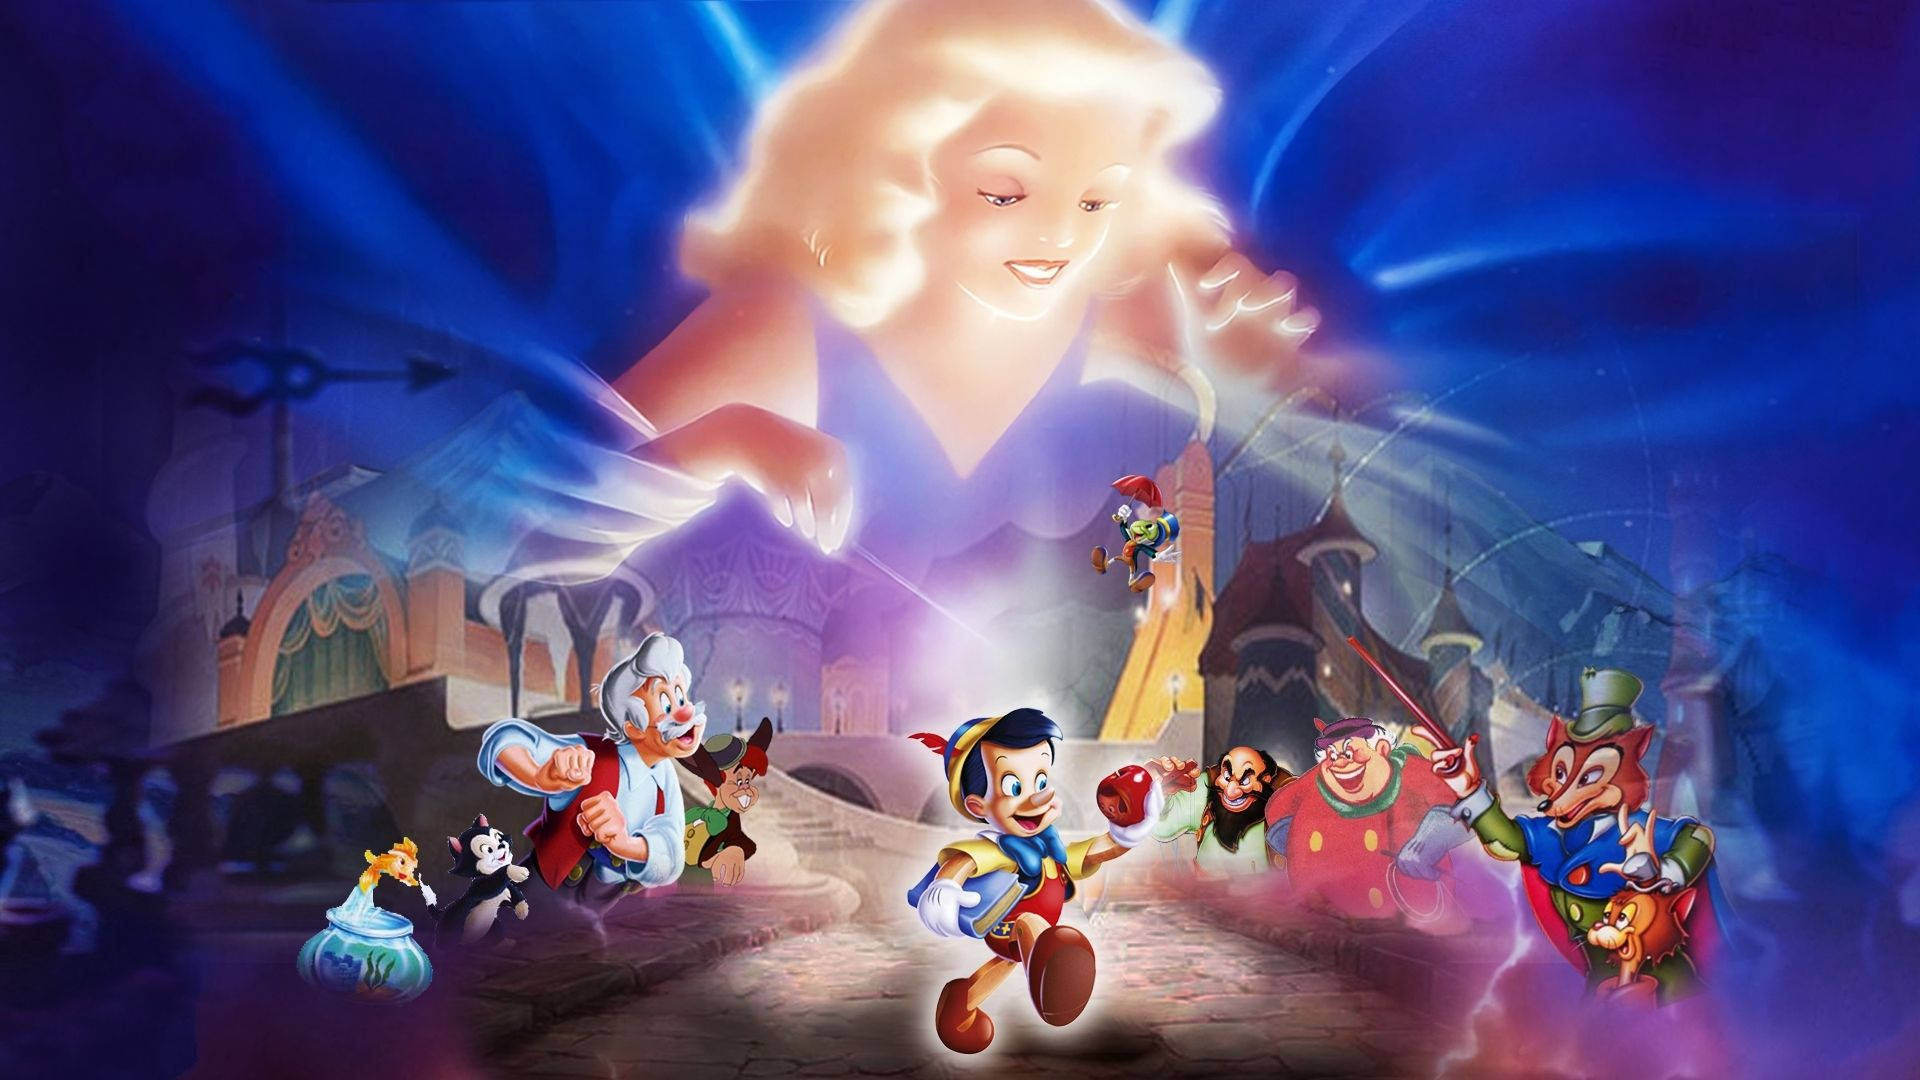 Pinocchio Characters